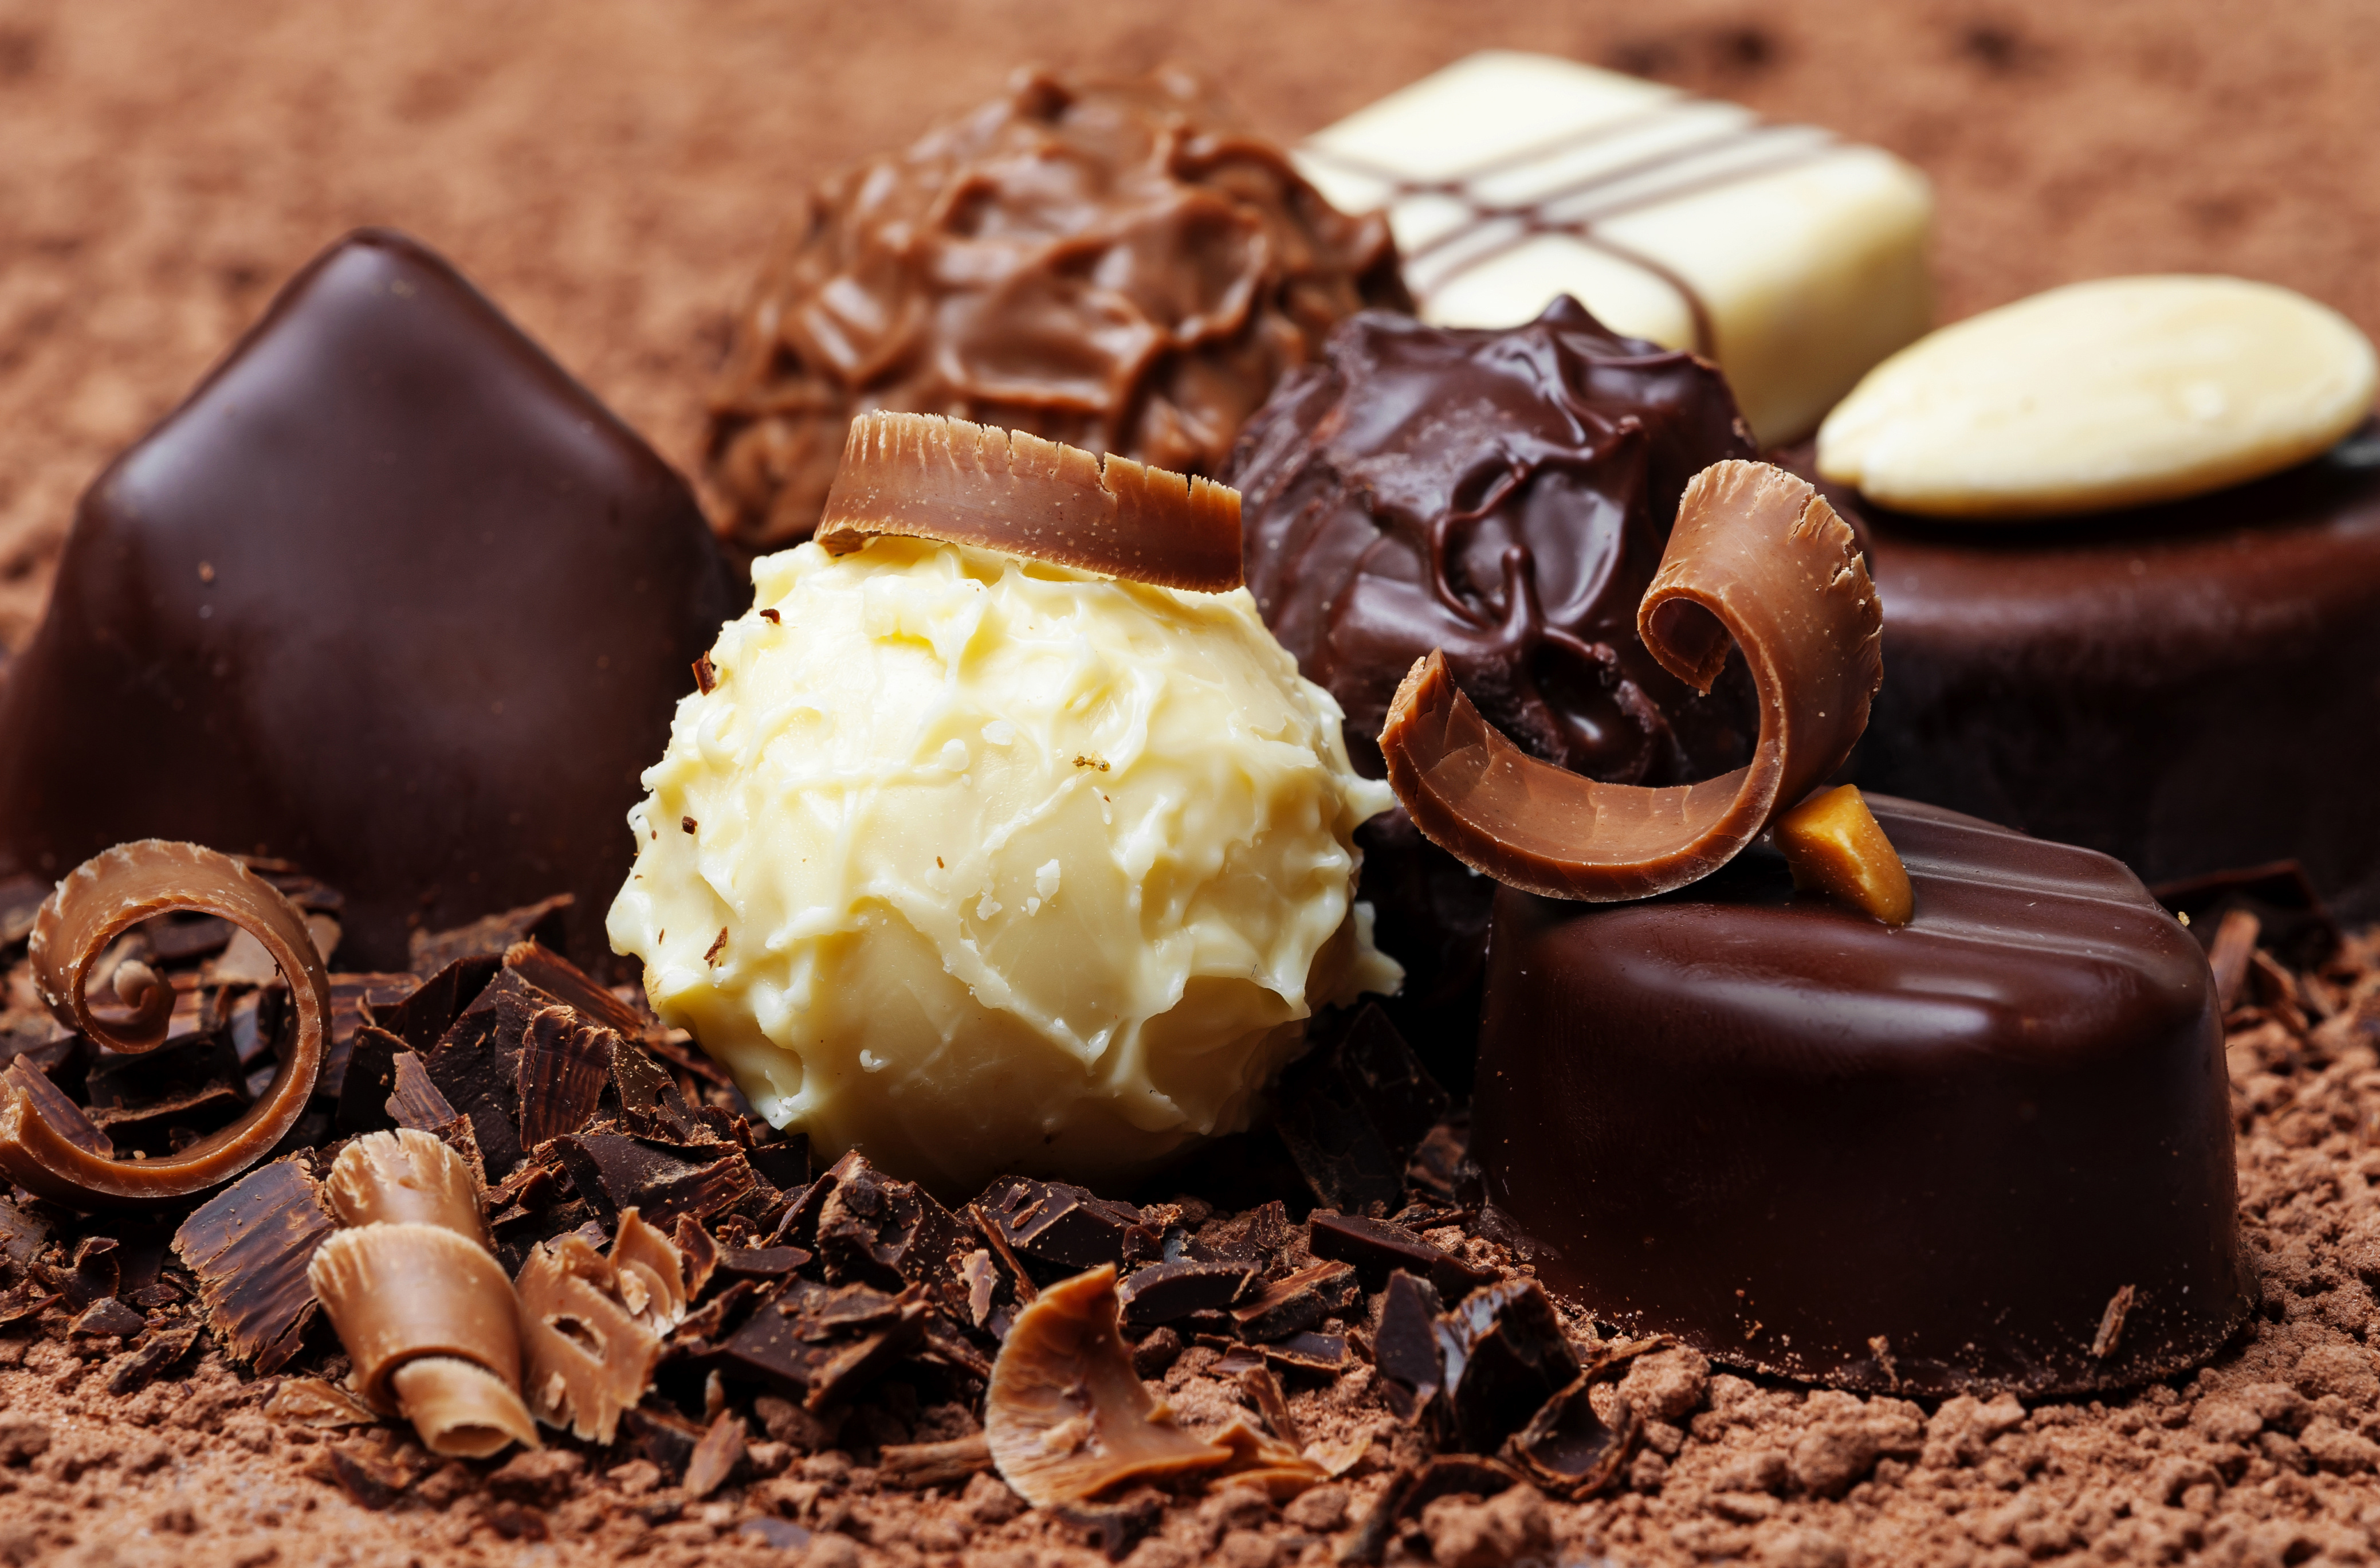 Chocolate pictures. Шоколад пралине. Конфеты шоколад. Красивые шоколадные конфеты. Красивый шоколад.